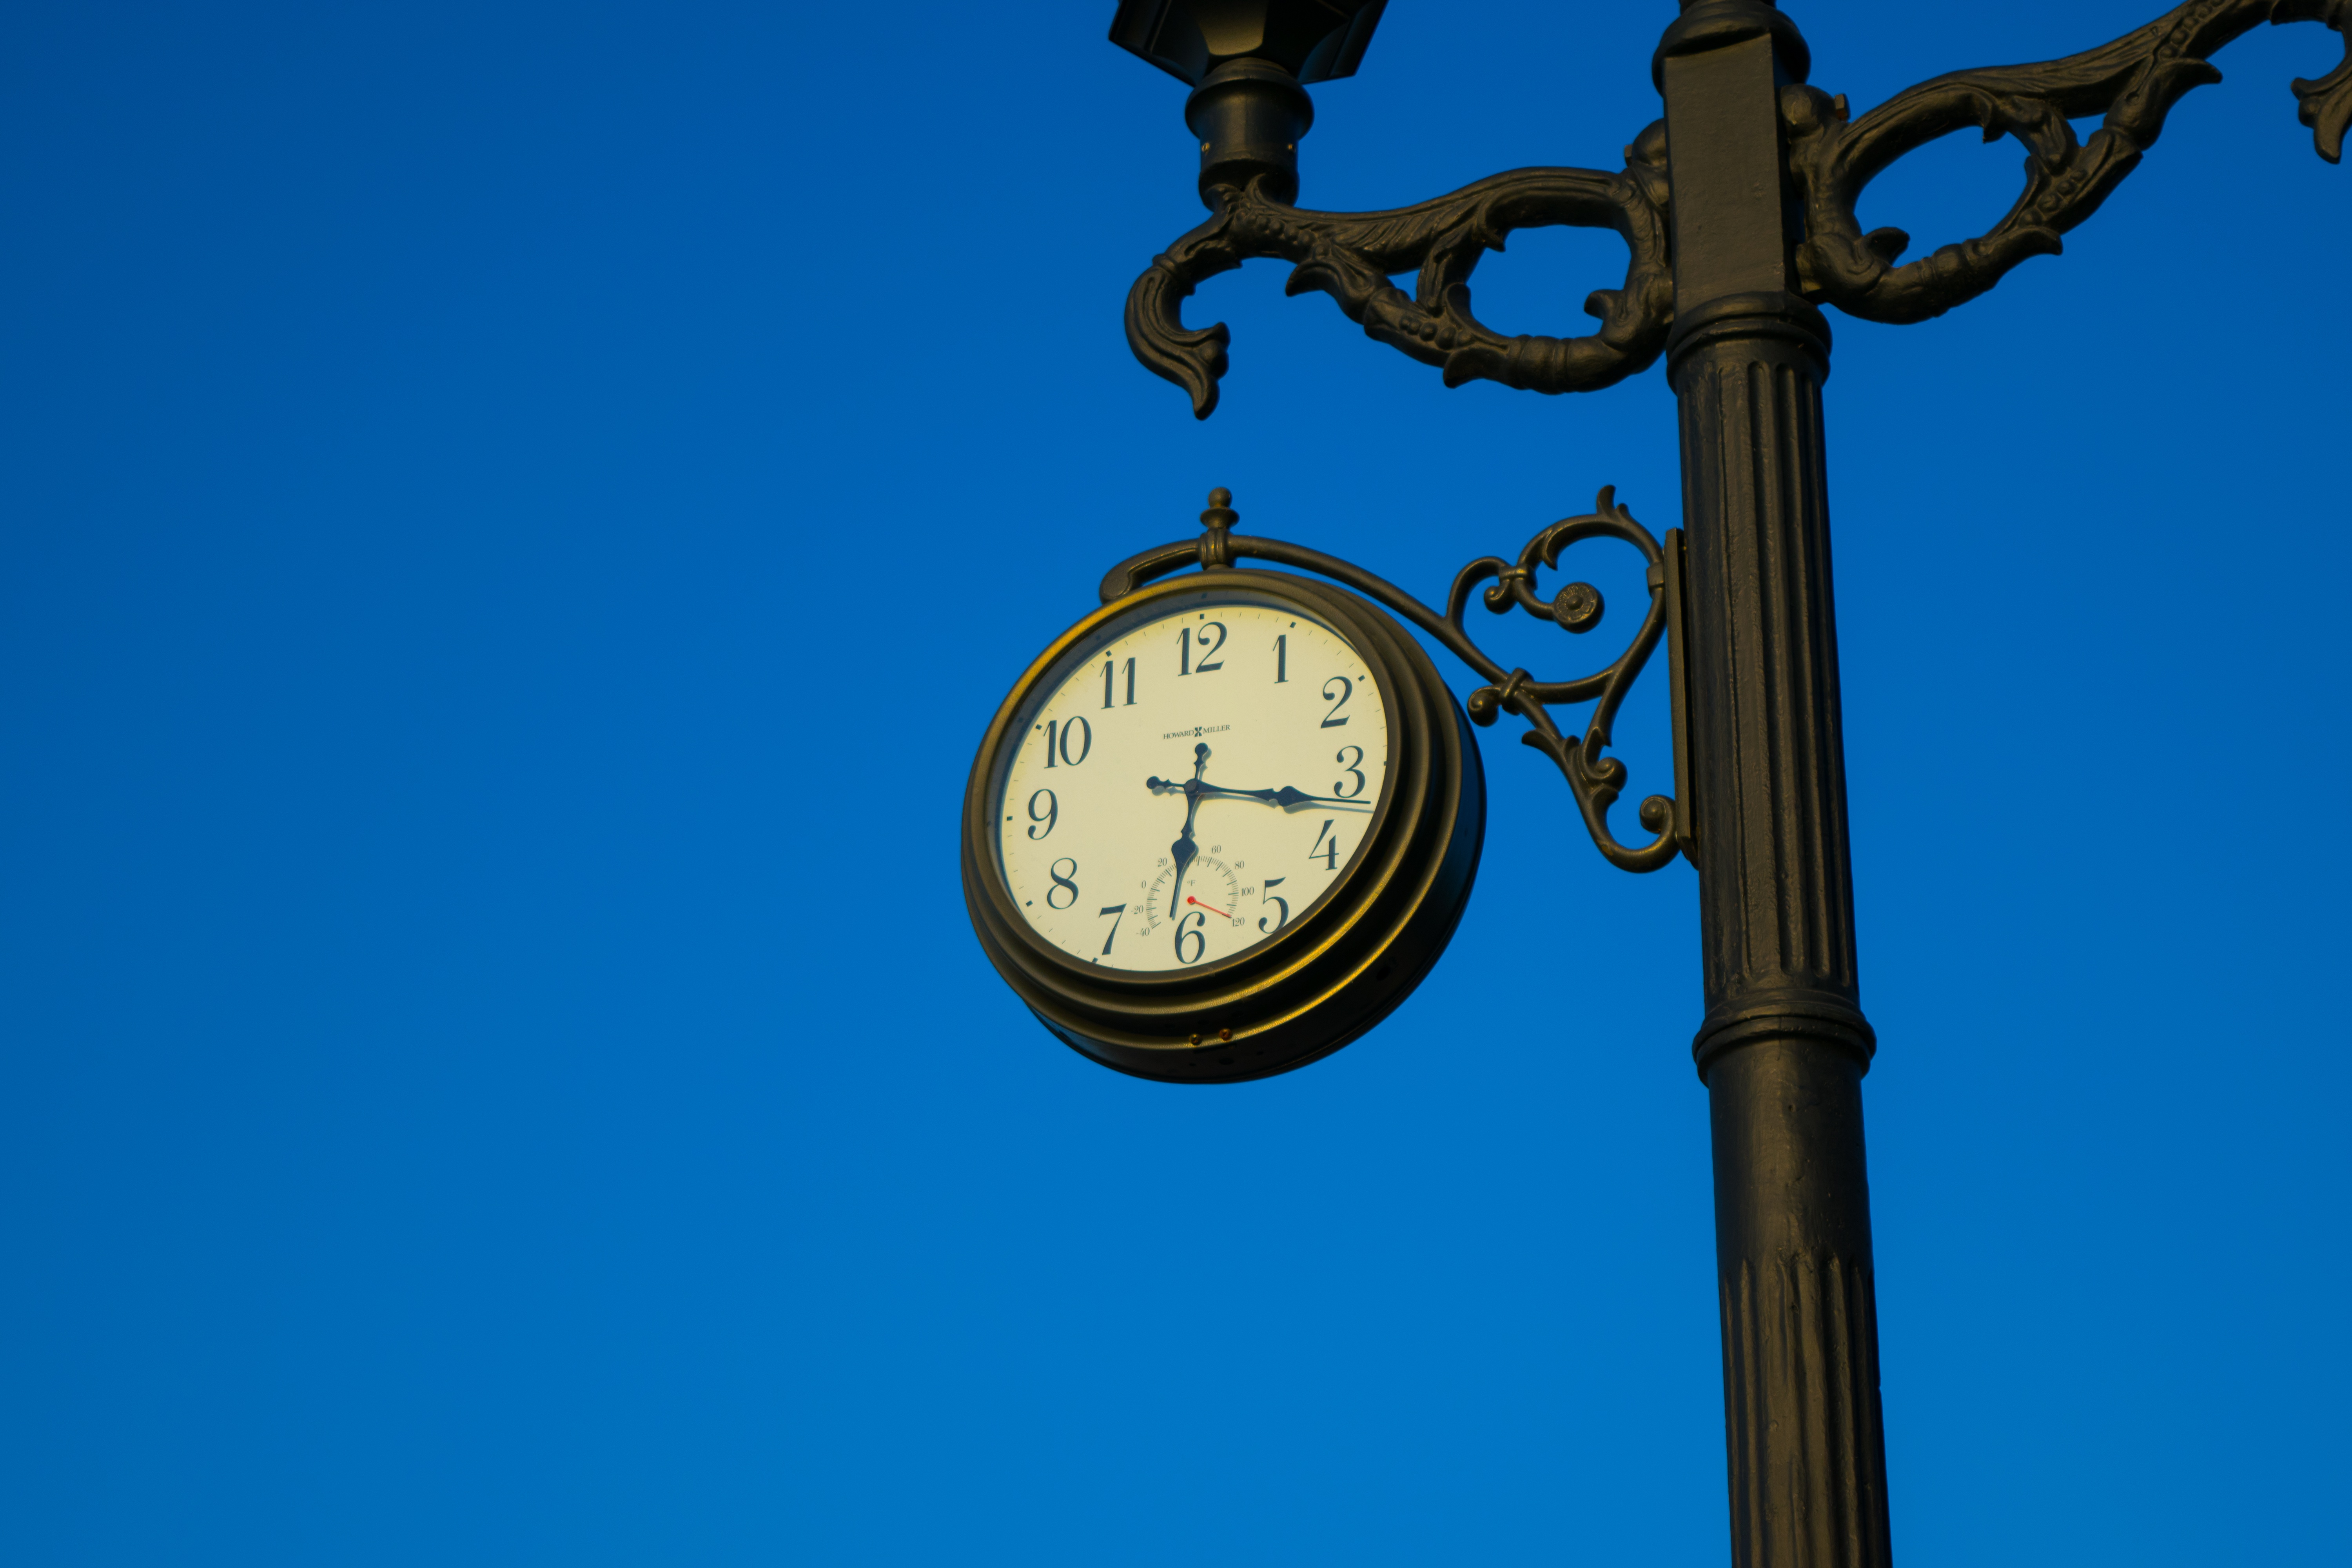 Post watch. Часы на столбе. Уличные часы на столбе. Фонарный столб с часами. Старинные уличные часы.